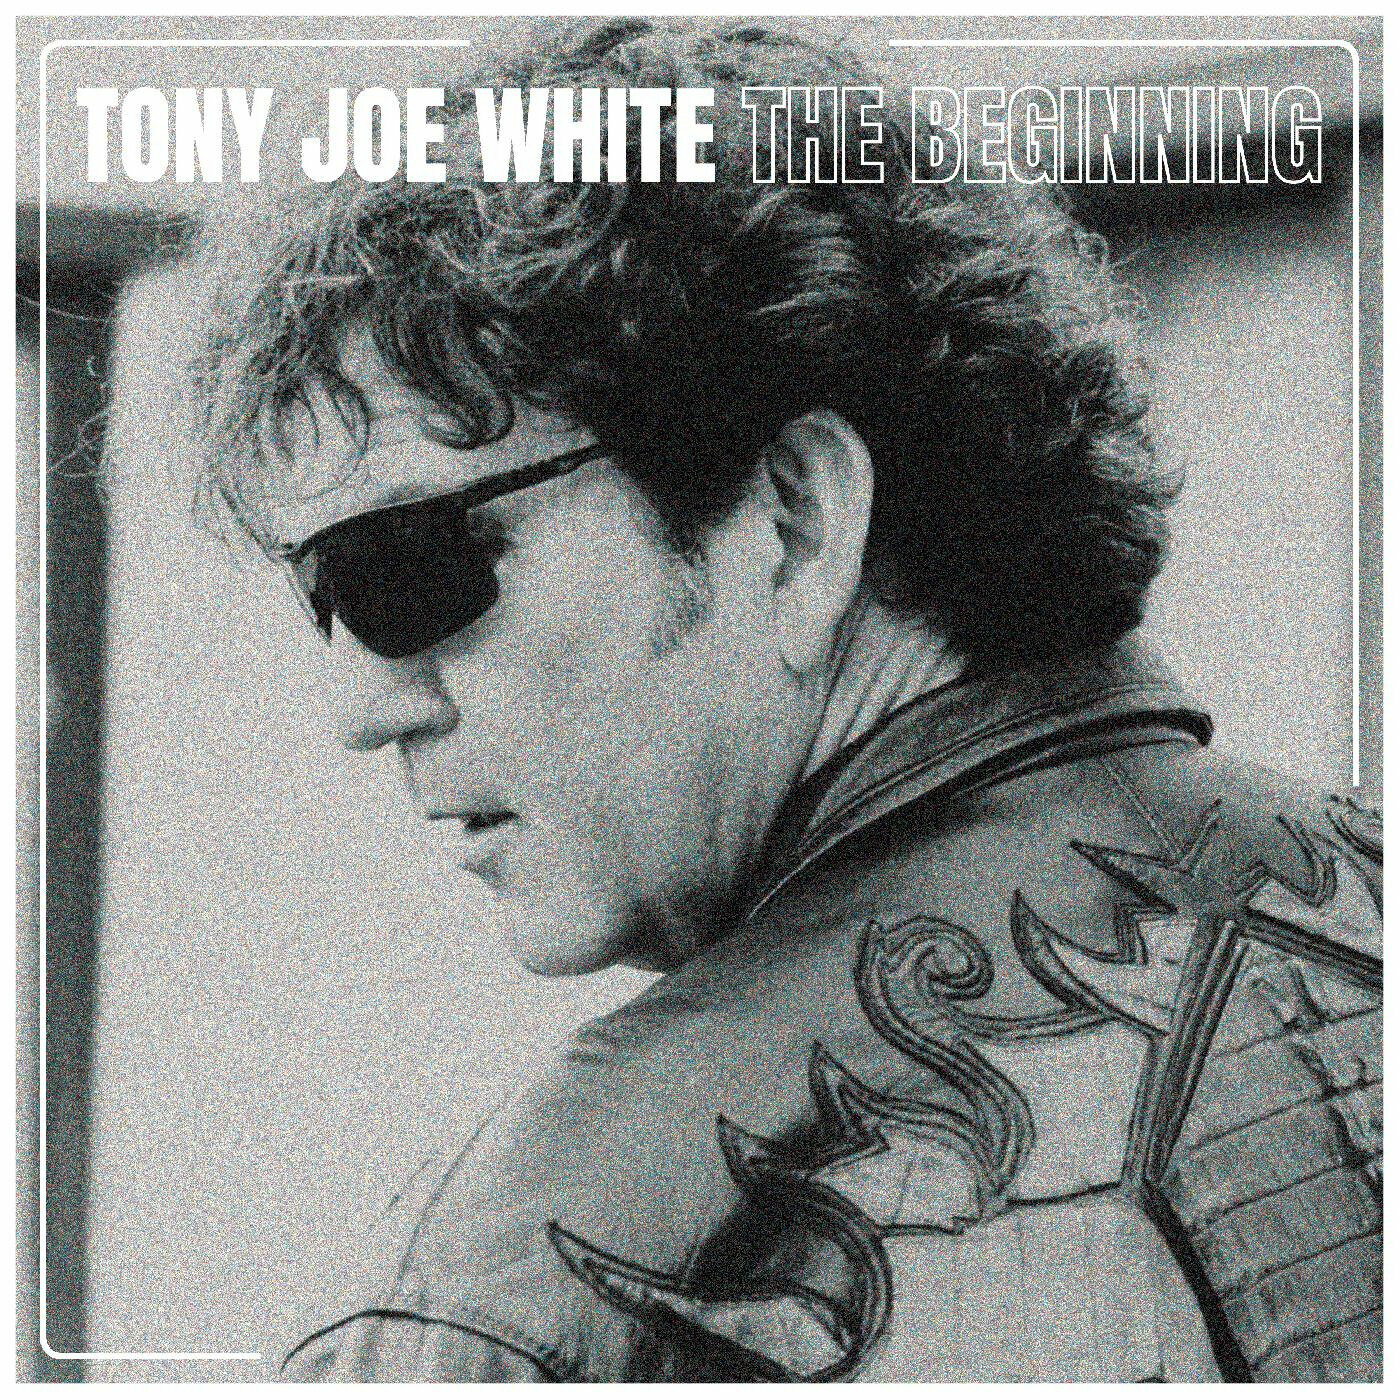 Disco de vinilo Tony Joe White - The Beginning (LP)